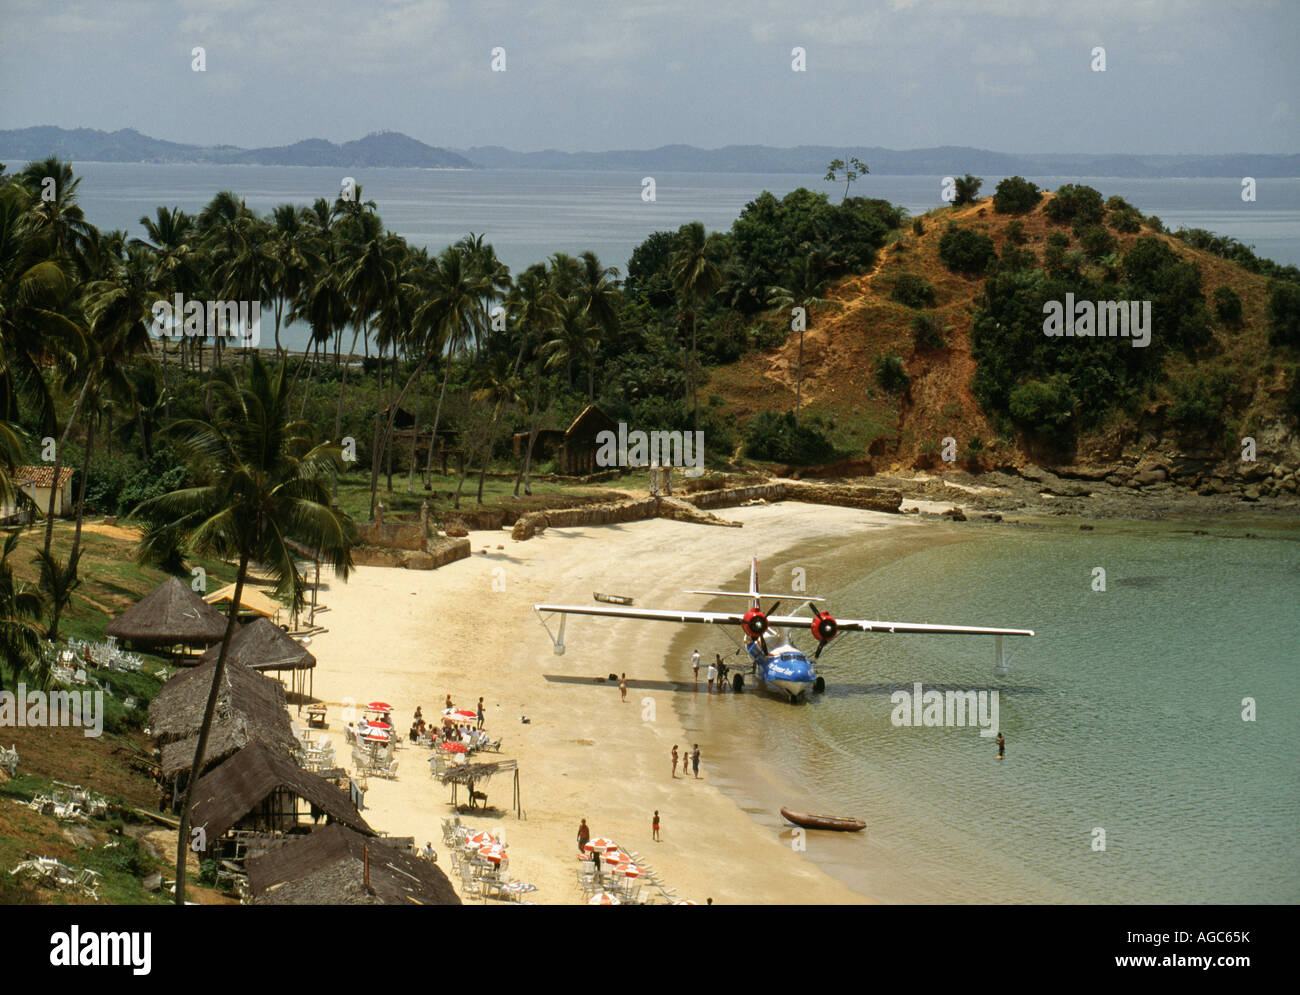 Brésil, Salvador de Bahia, Catalina PBY 5a flying boat on beach Banque D'Images